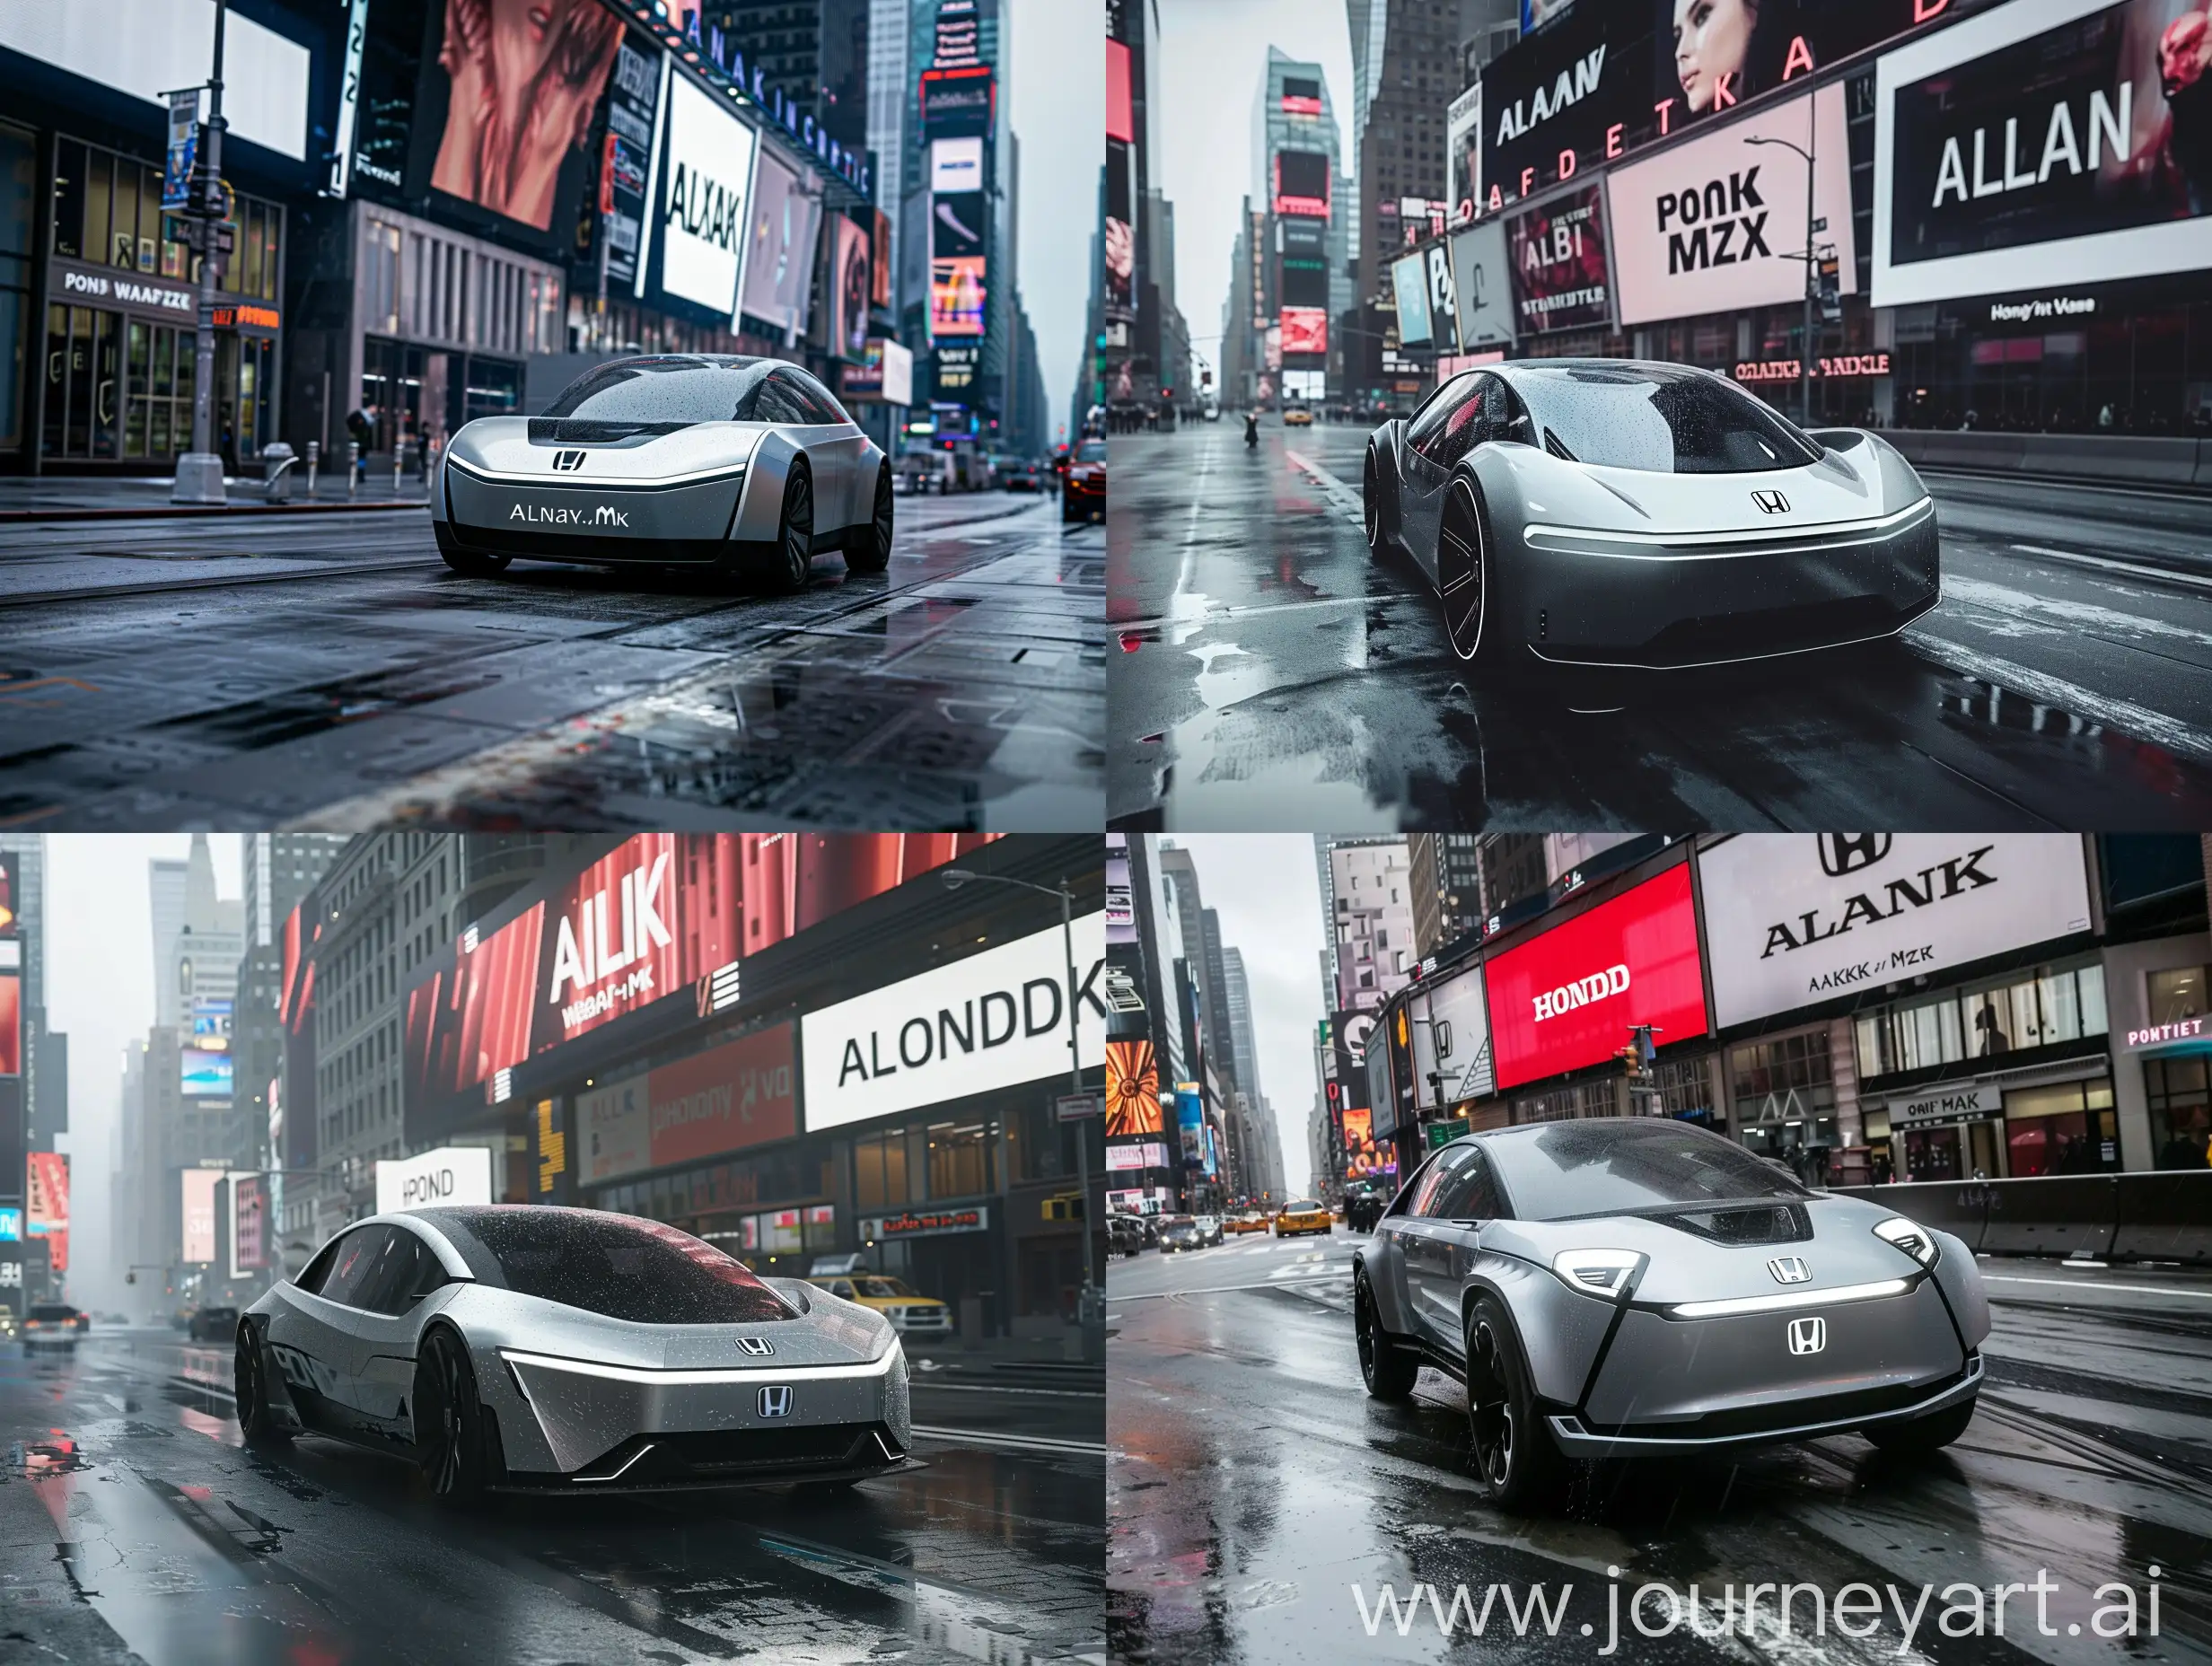 Futuristic-Autonomous-Honda-Vehicle-Driving-in-Rainy-New-York-City